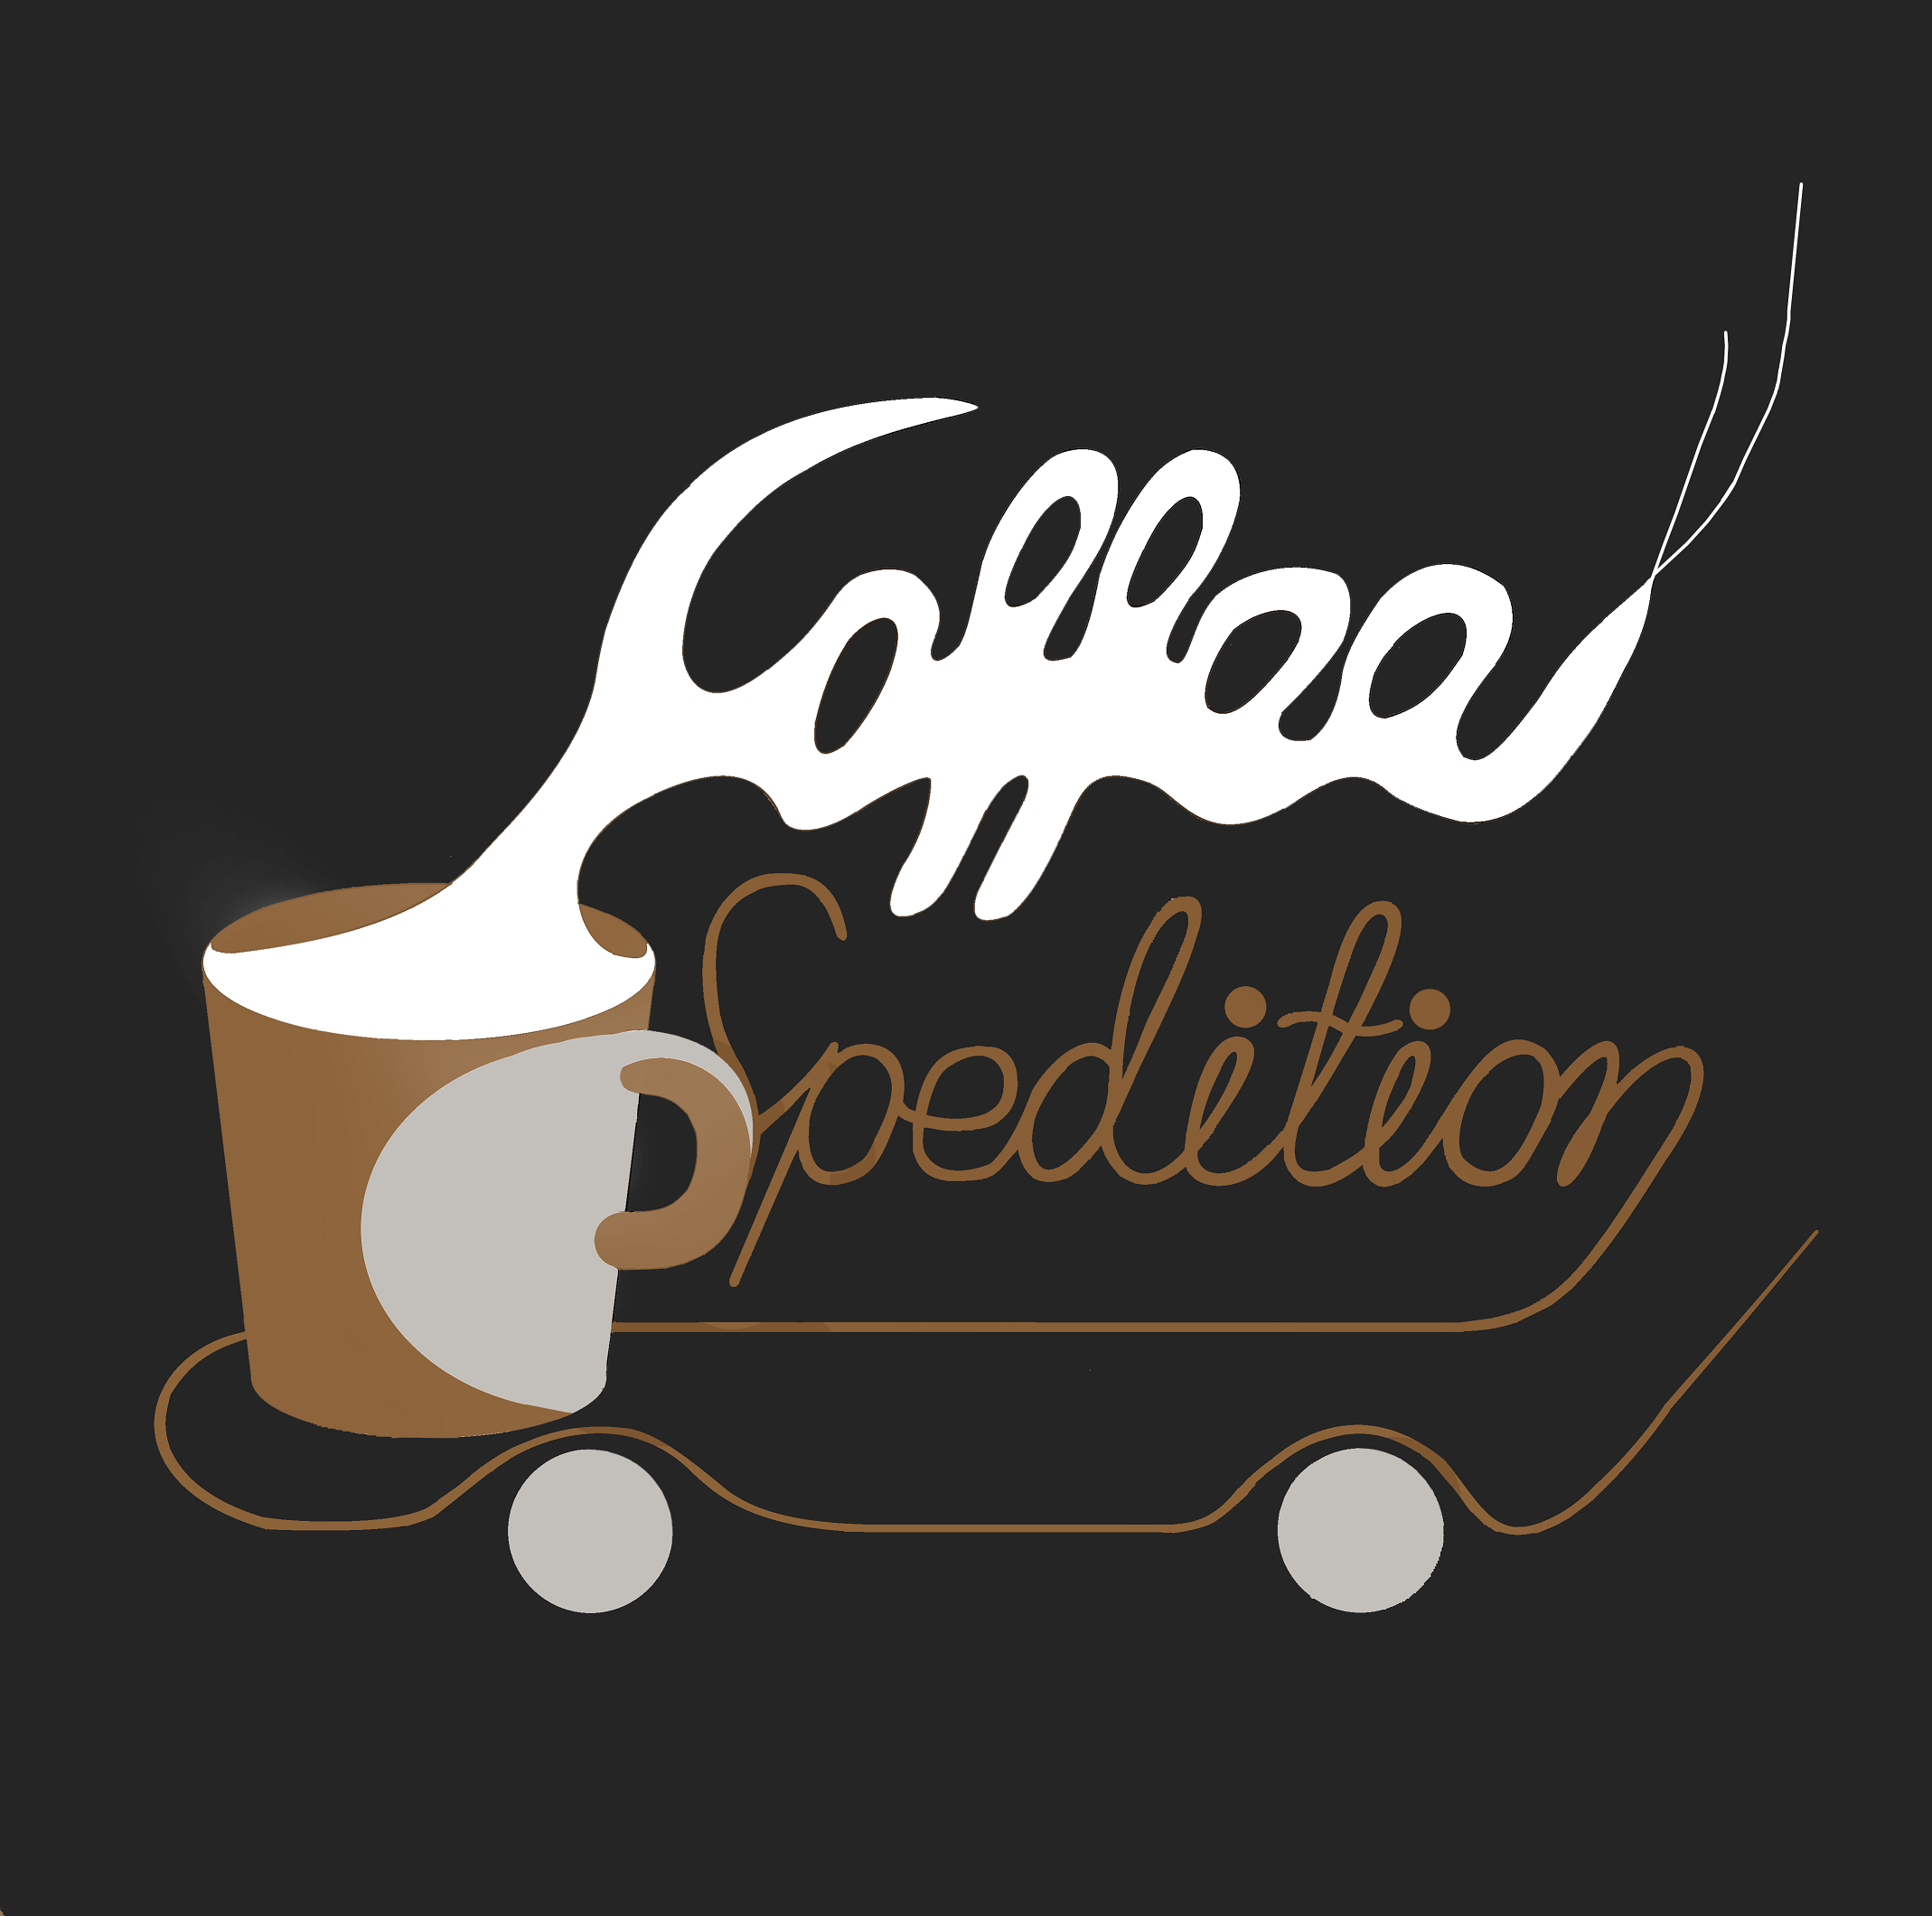 Coffee-Spedition